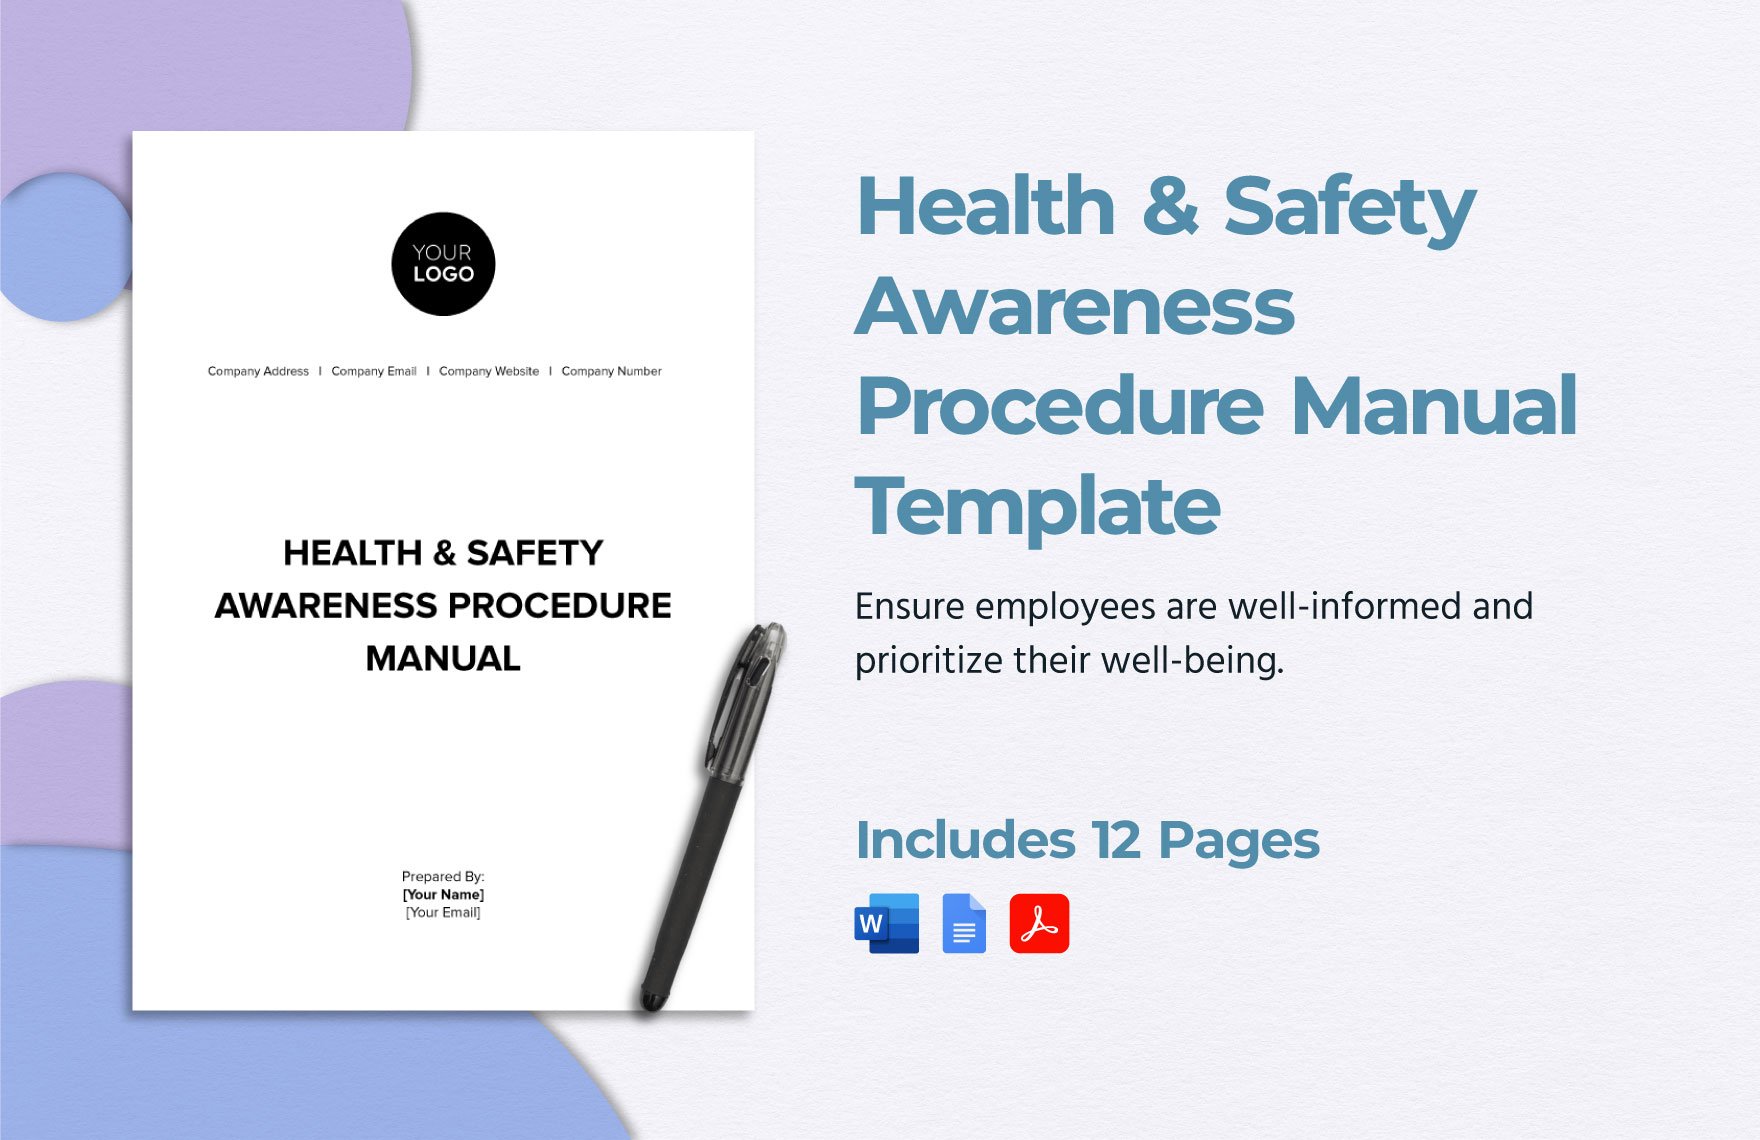 Health & Safety Awareness Procedure Manual Template